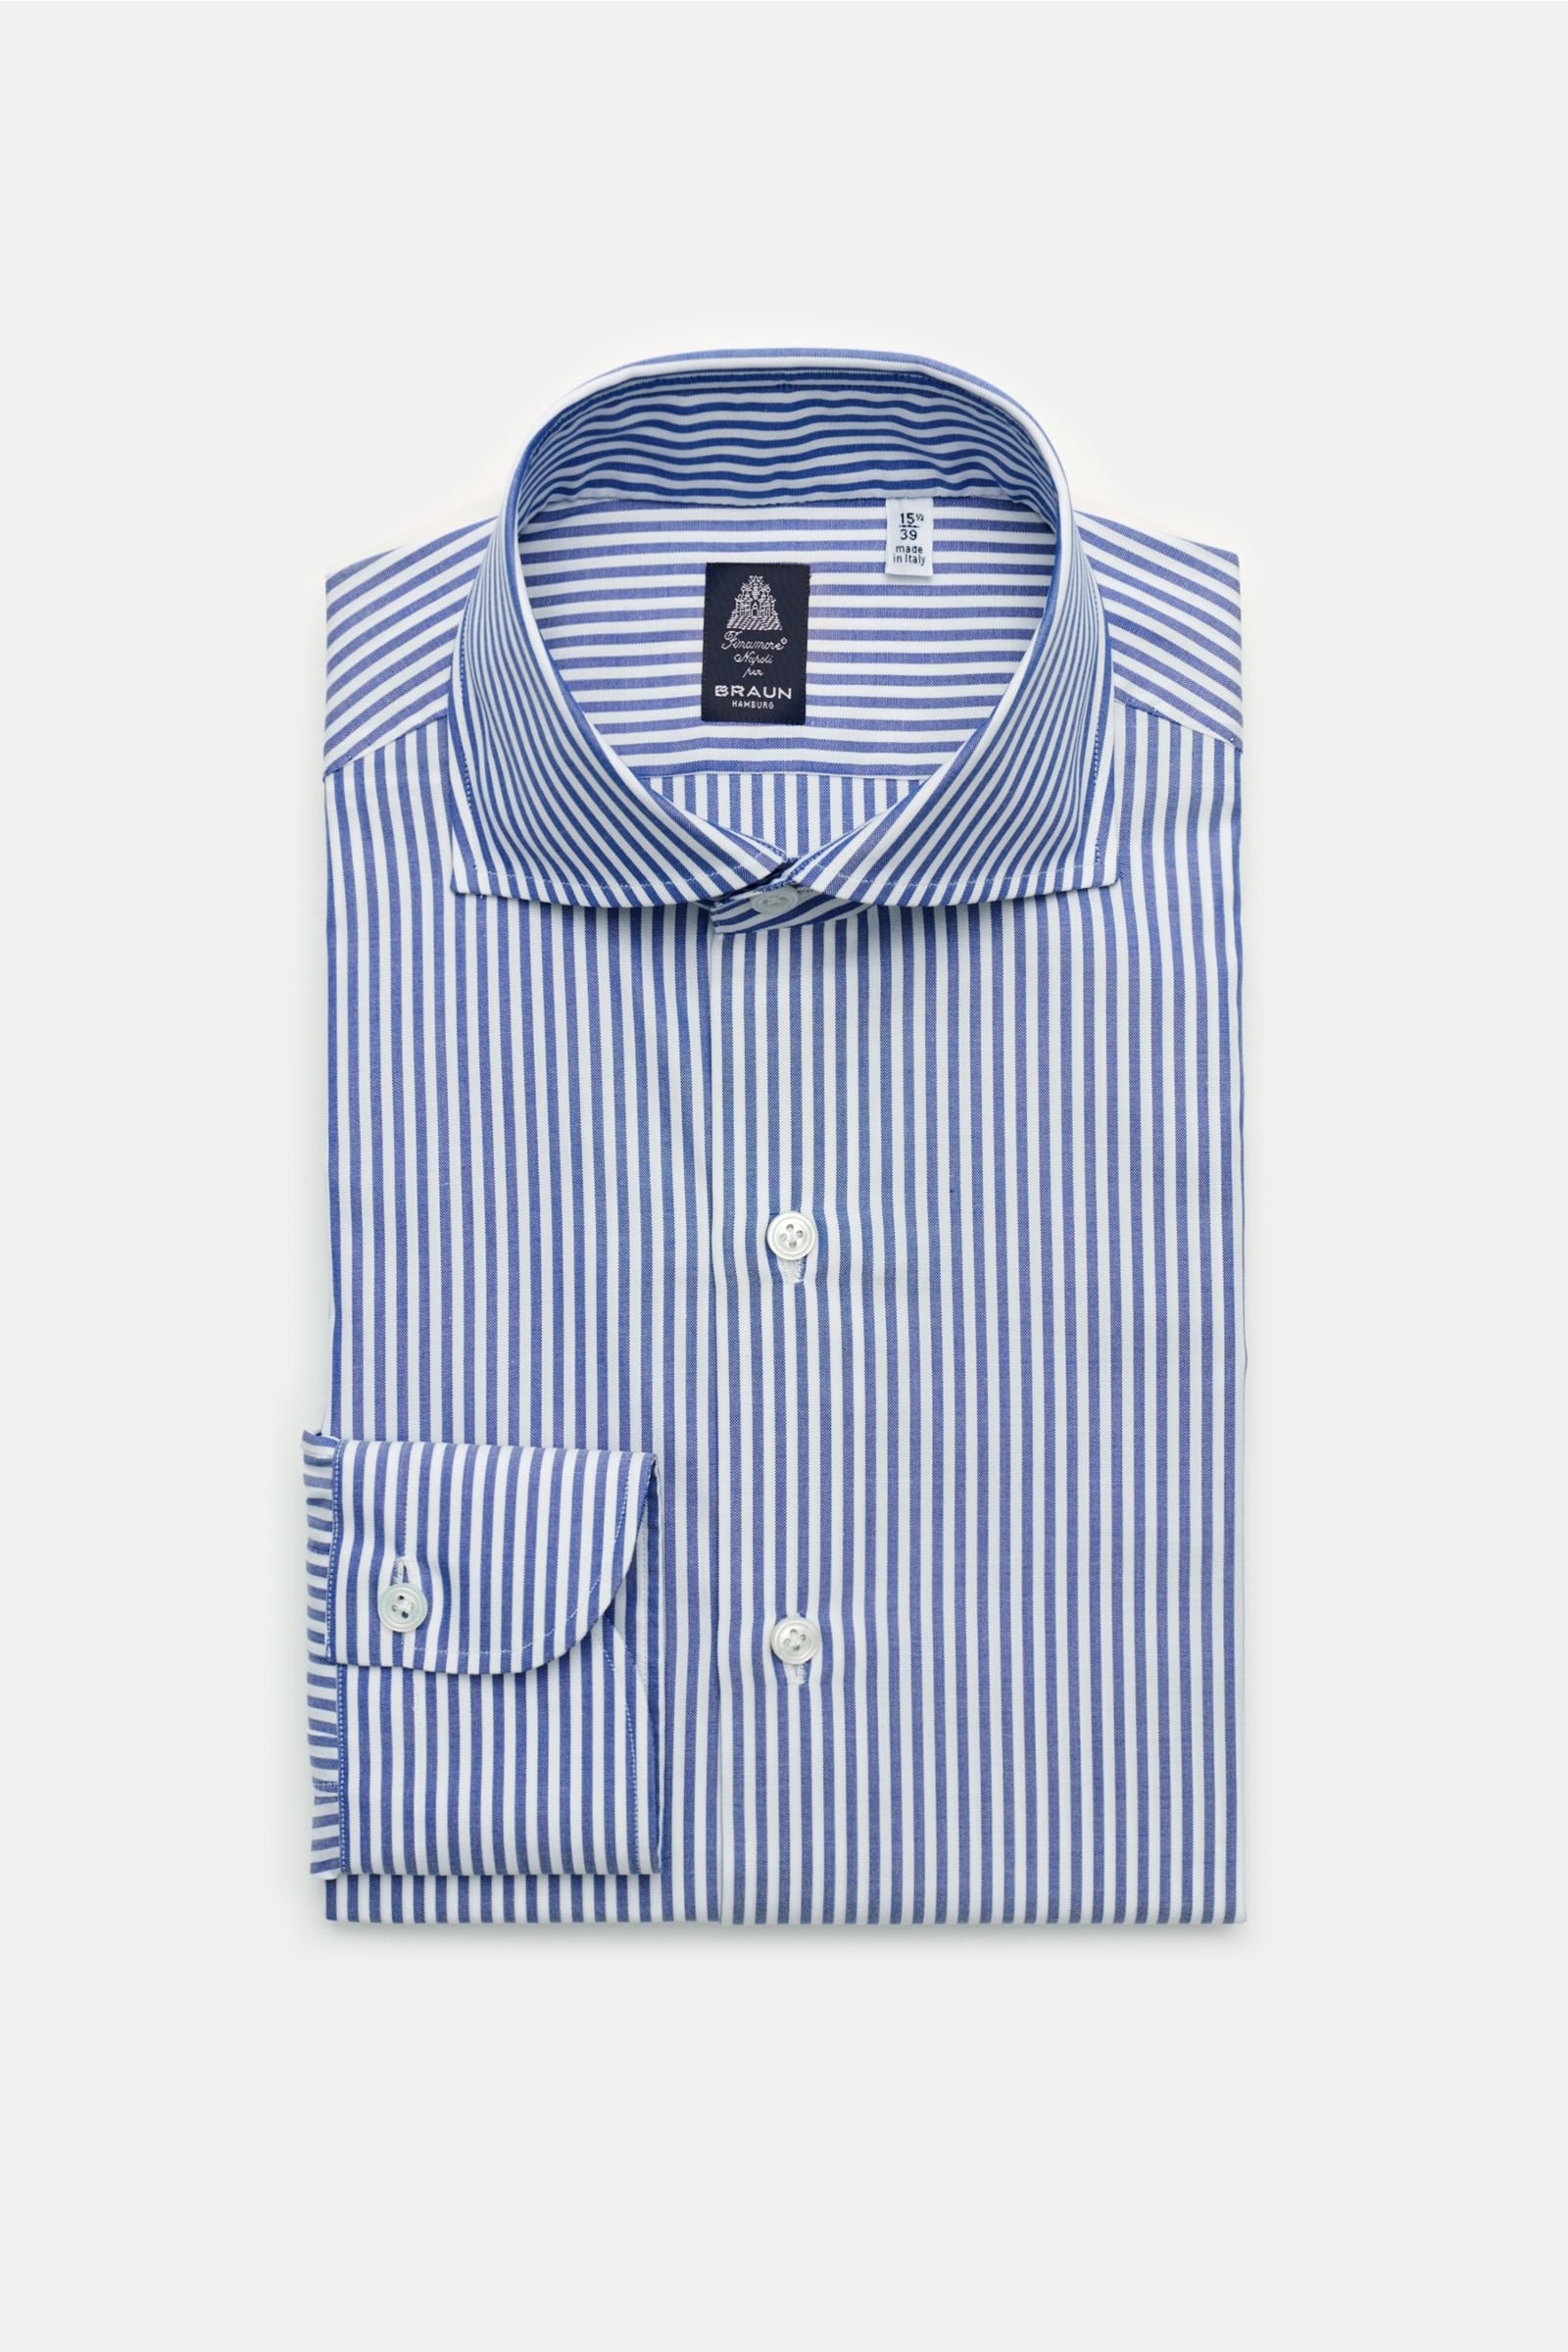 Business shirt 'Eduardo Napoli' shark collar grey-blue/white striped